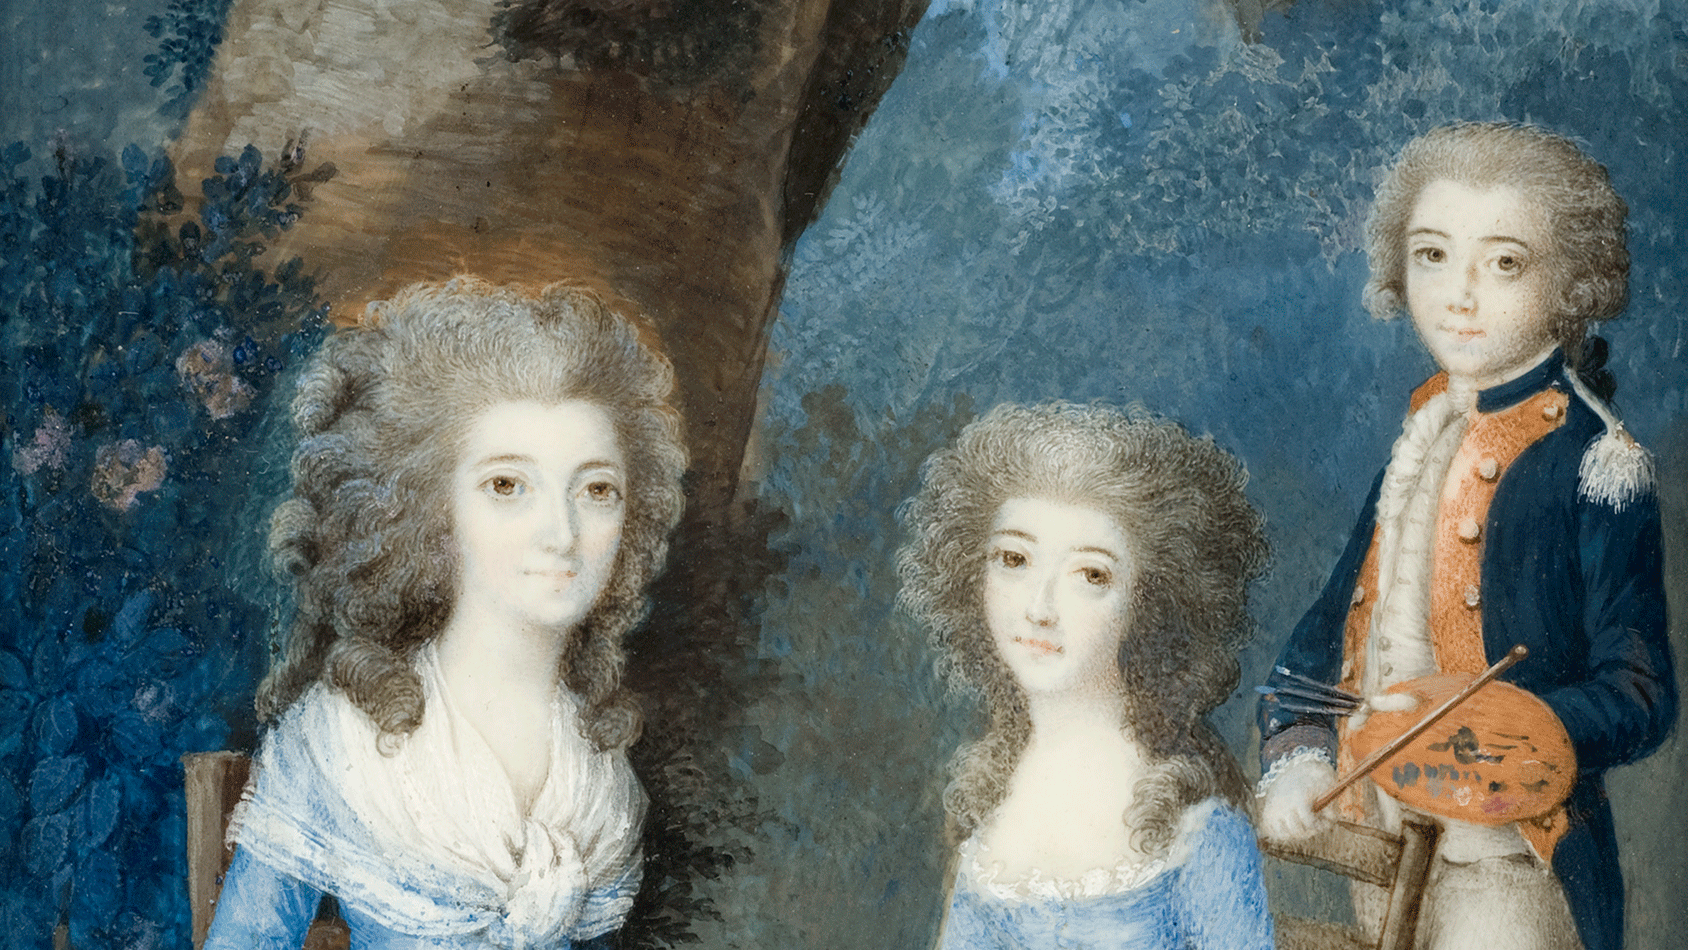 Louis Marie Sicardi, Miniature Portrait of Louis XVI